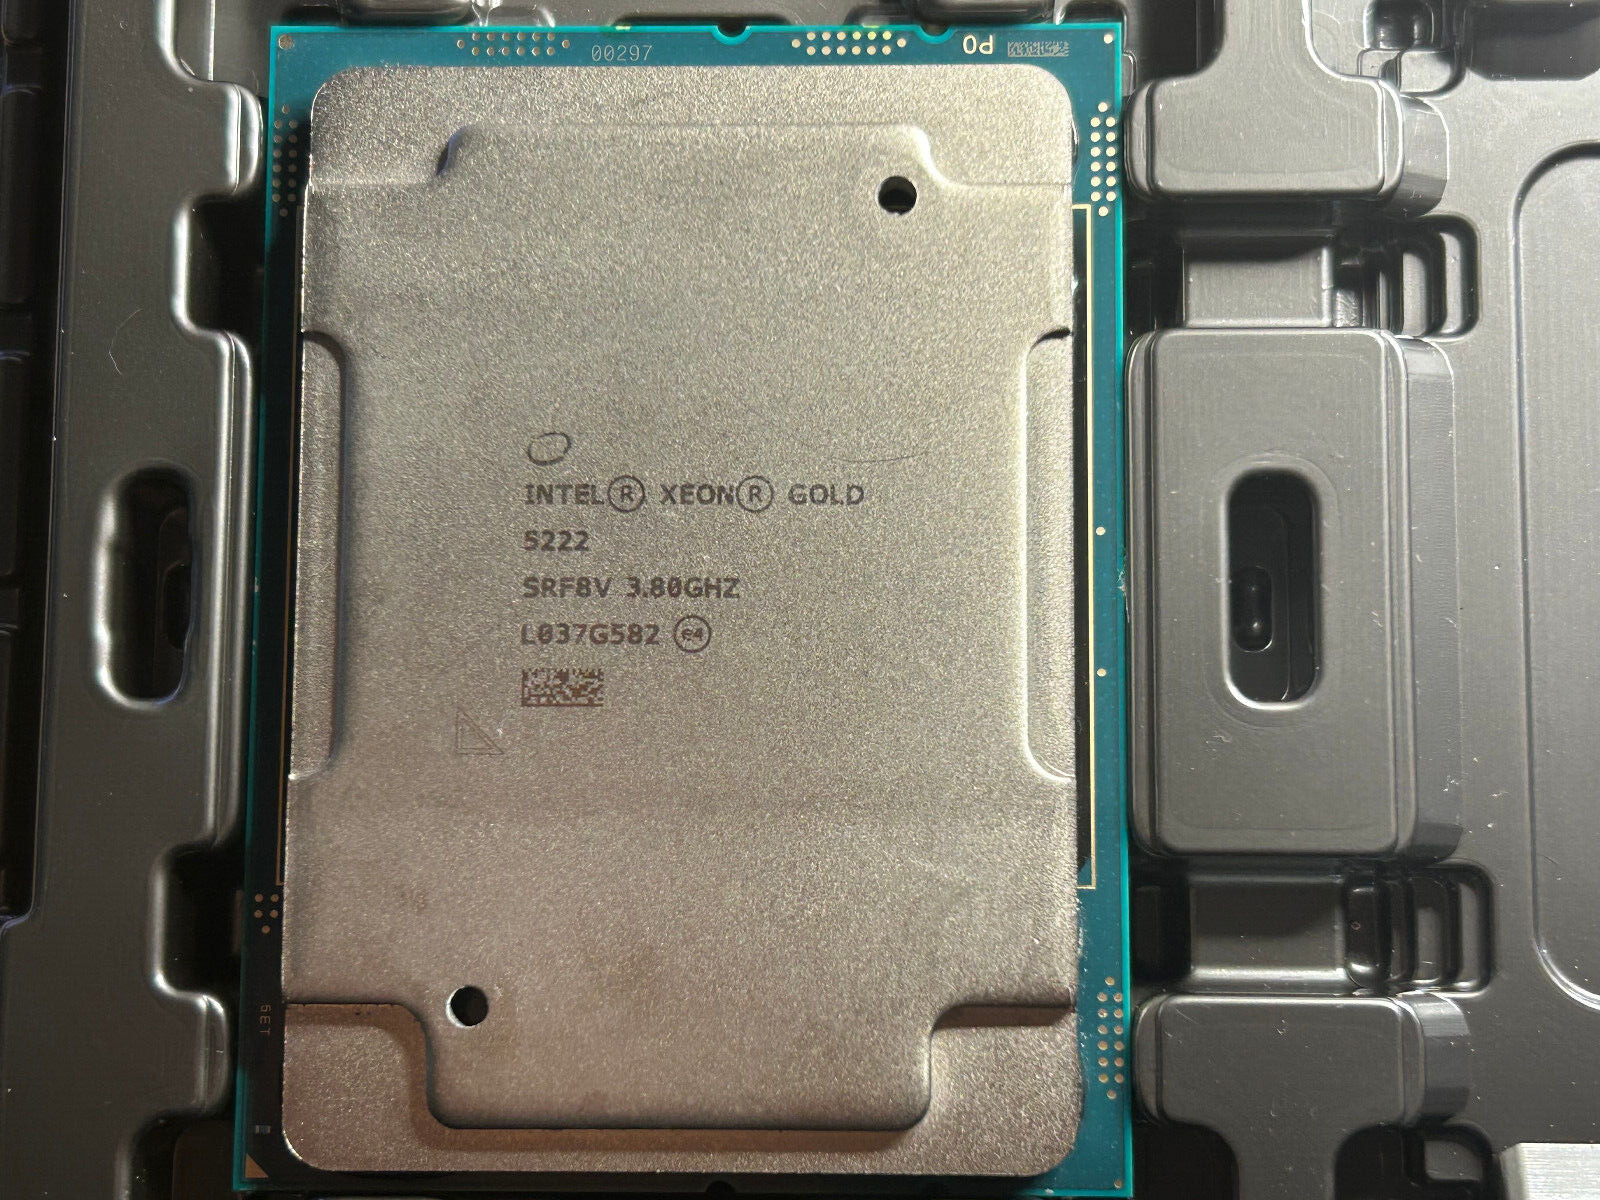 Intel Xeon Gold 5222  SRF8V   4-Core 16.5M 3.80GHZ